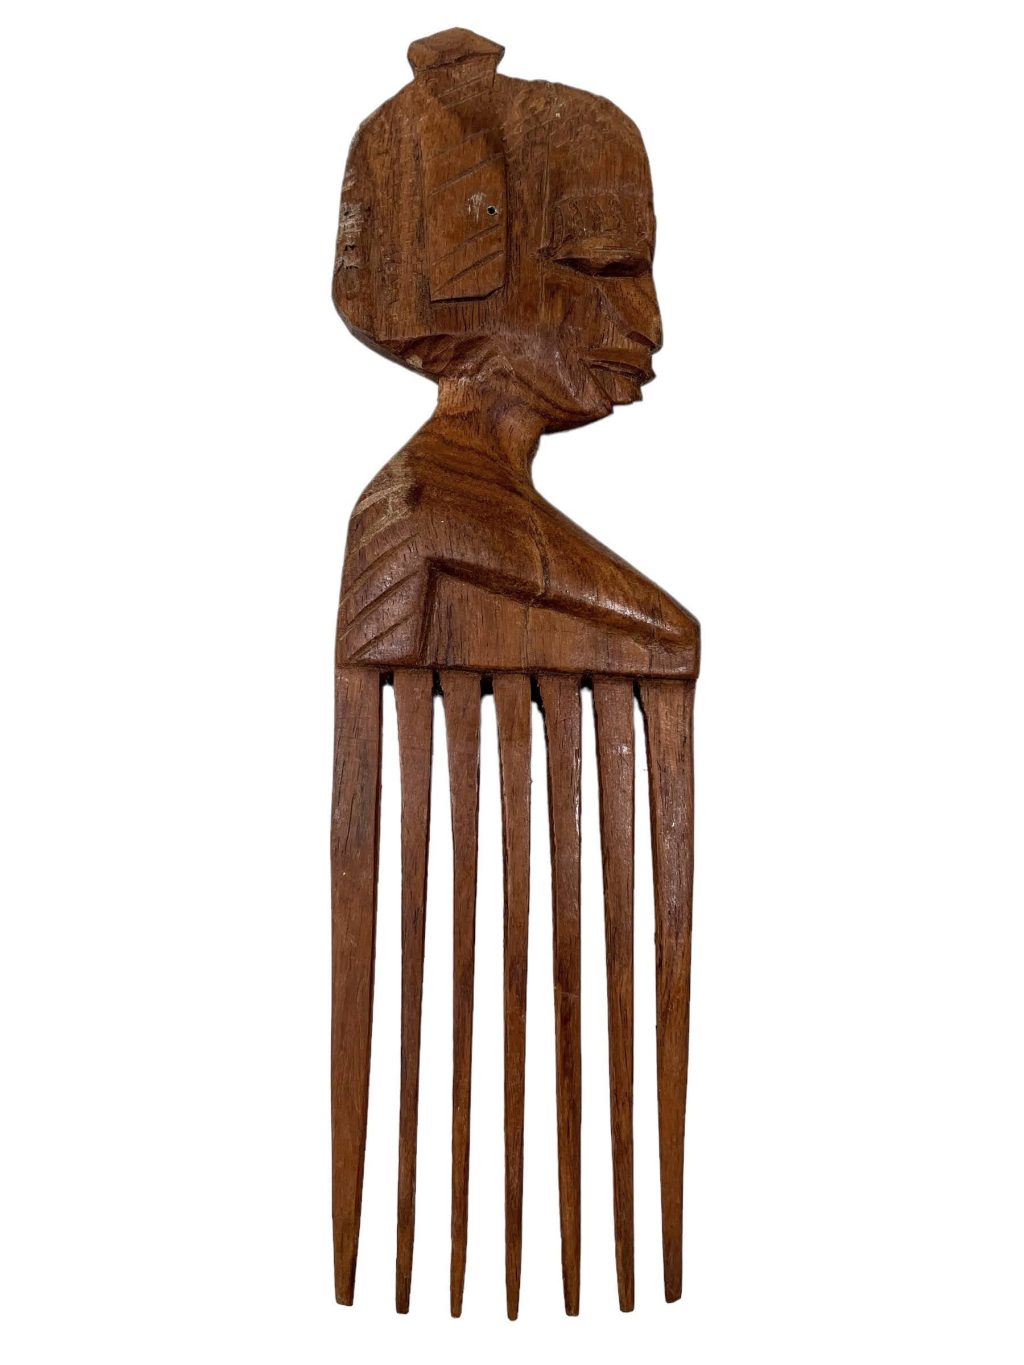 Vintage African Comb Afro Pick Bird Wood Hair Sculpture Carving Tribal Art Decor Slide Head Jewellery Accessories c1990-00’s